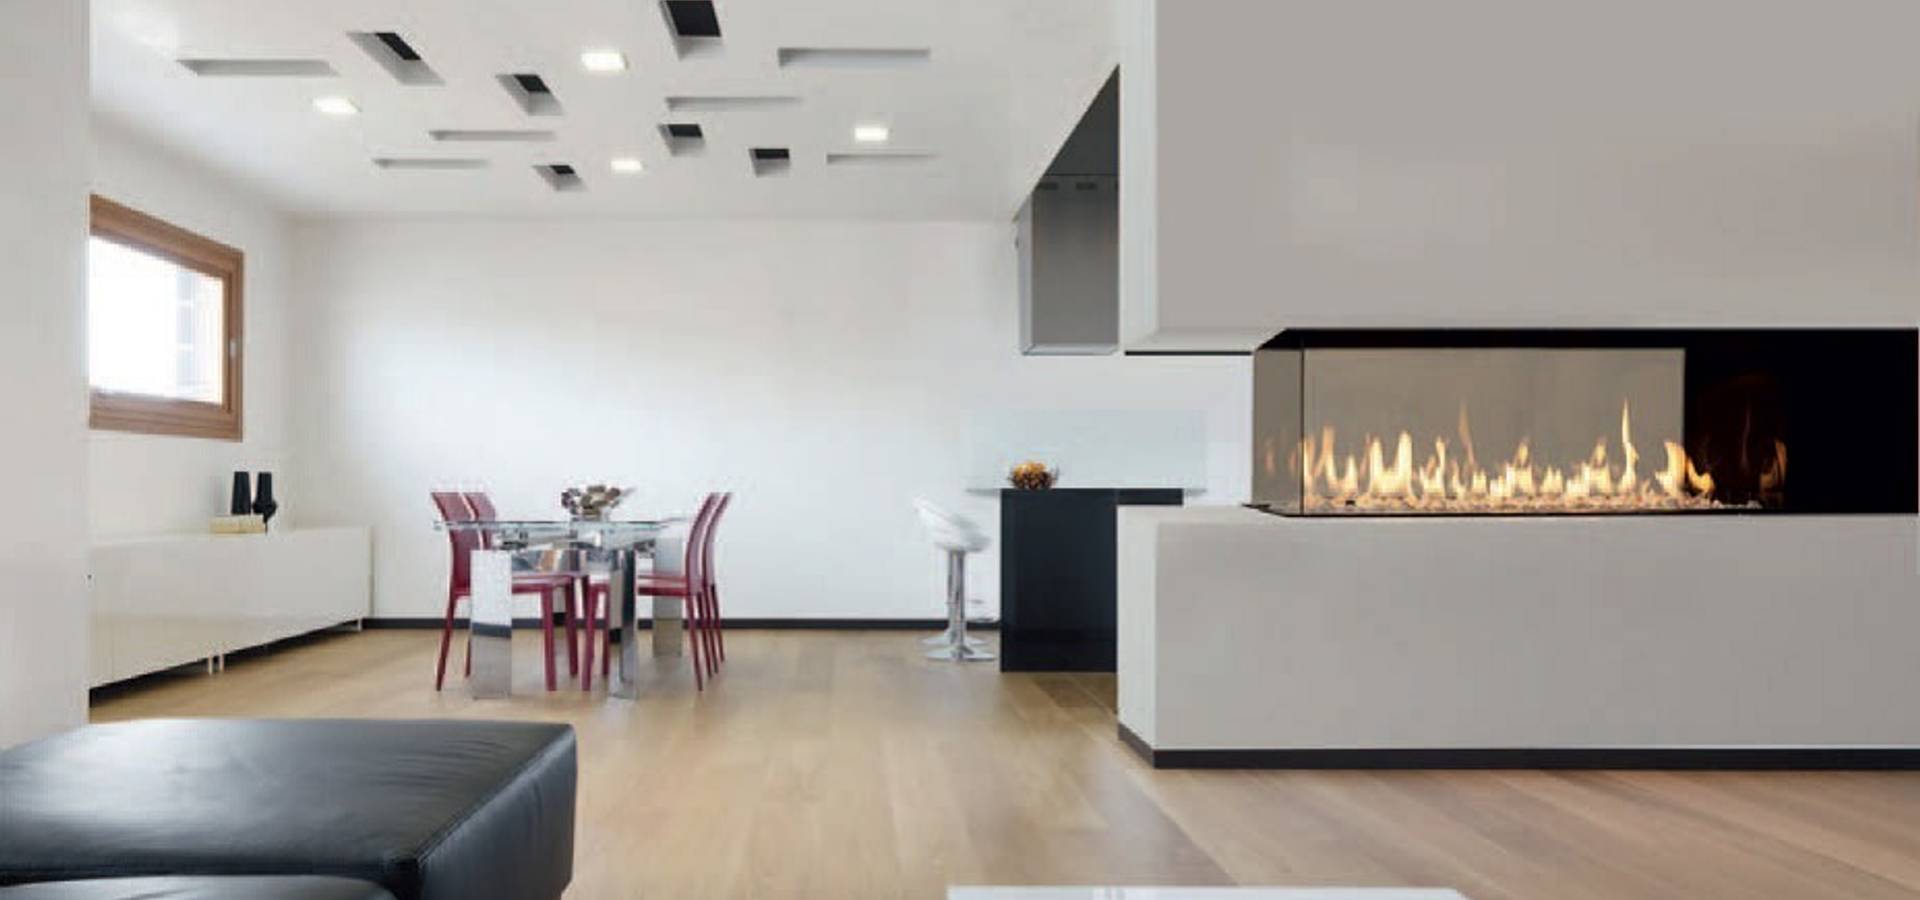 Anglia Fireplaces &amp; Design Ltd